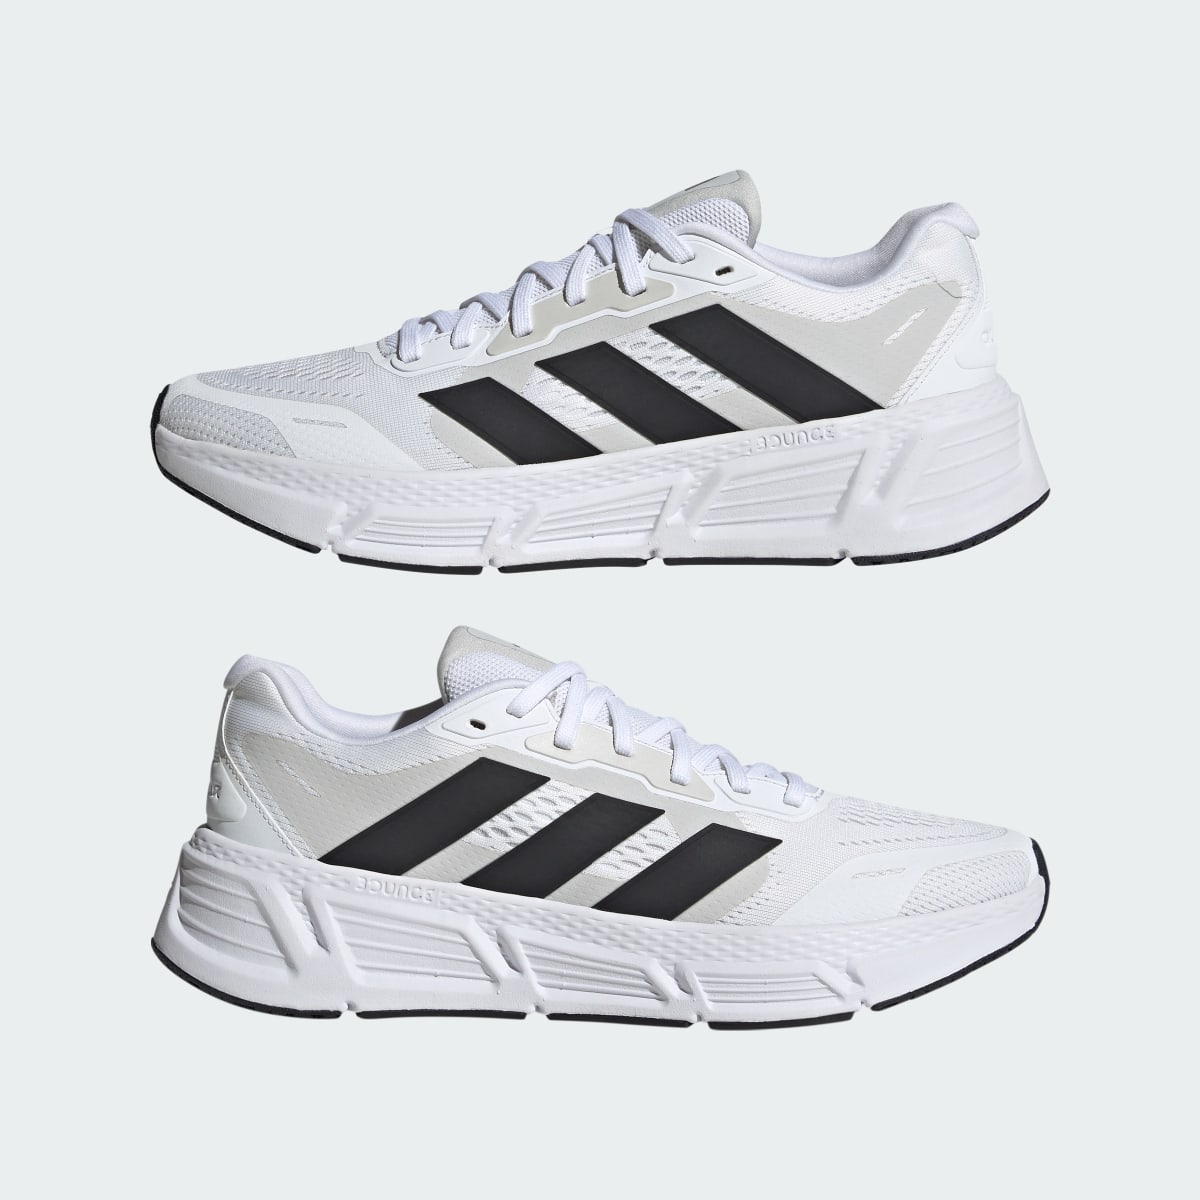 Adidas Questar Shoes. 8